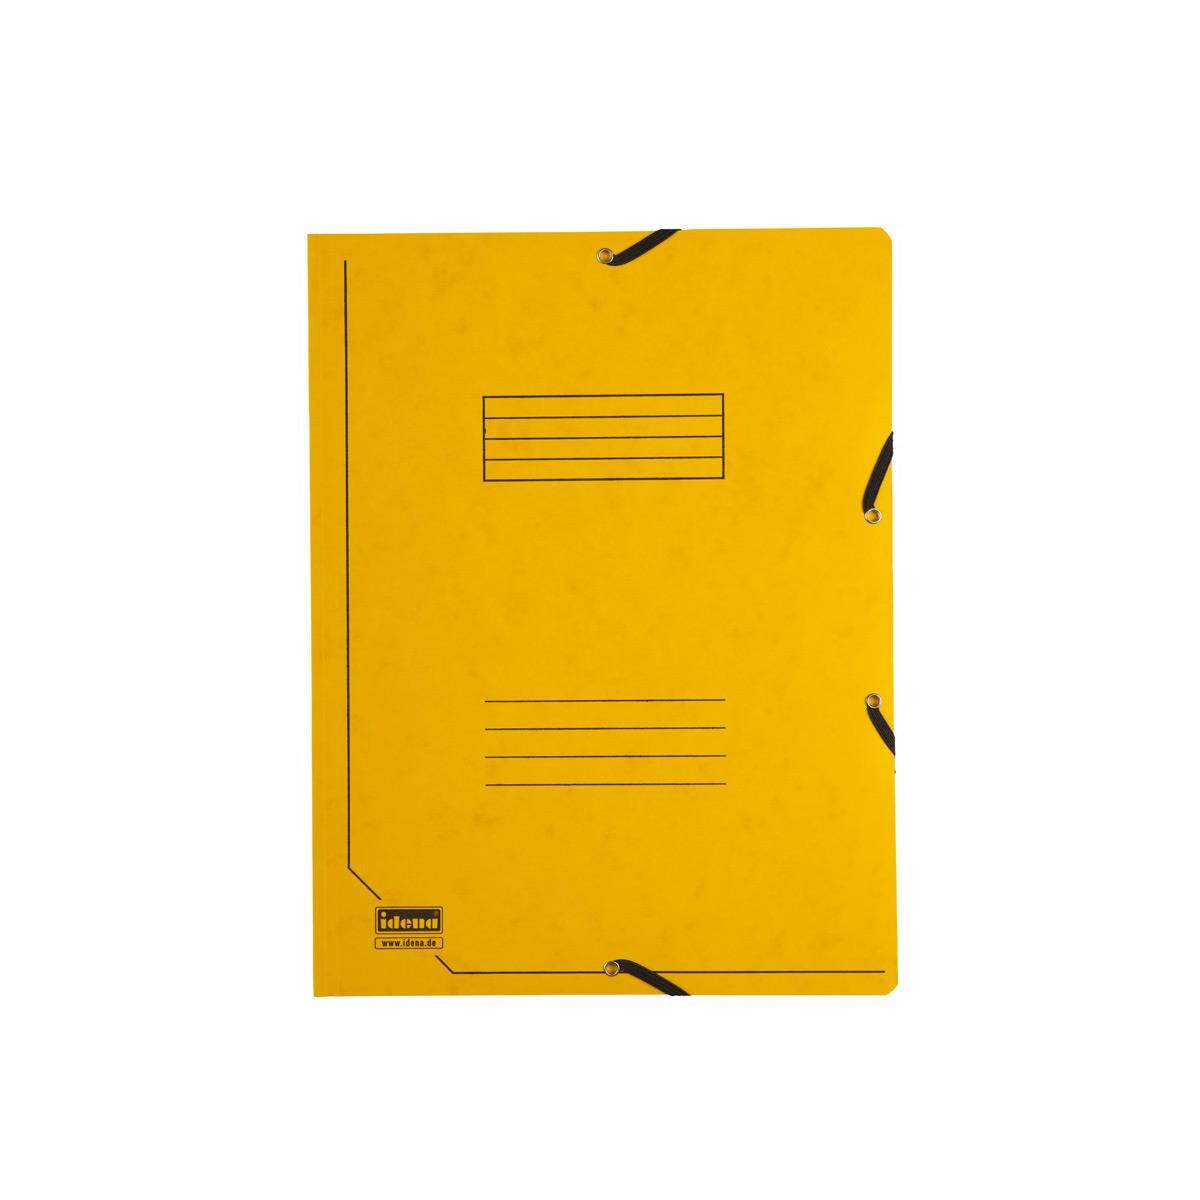 Idena Eckspann-Mappen, DIN A4, aus Karton, 3 Stück/3 Farben